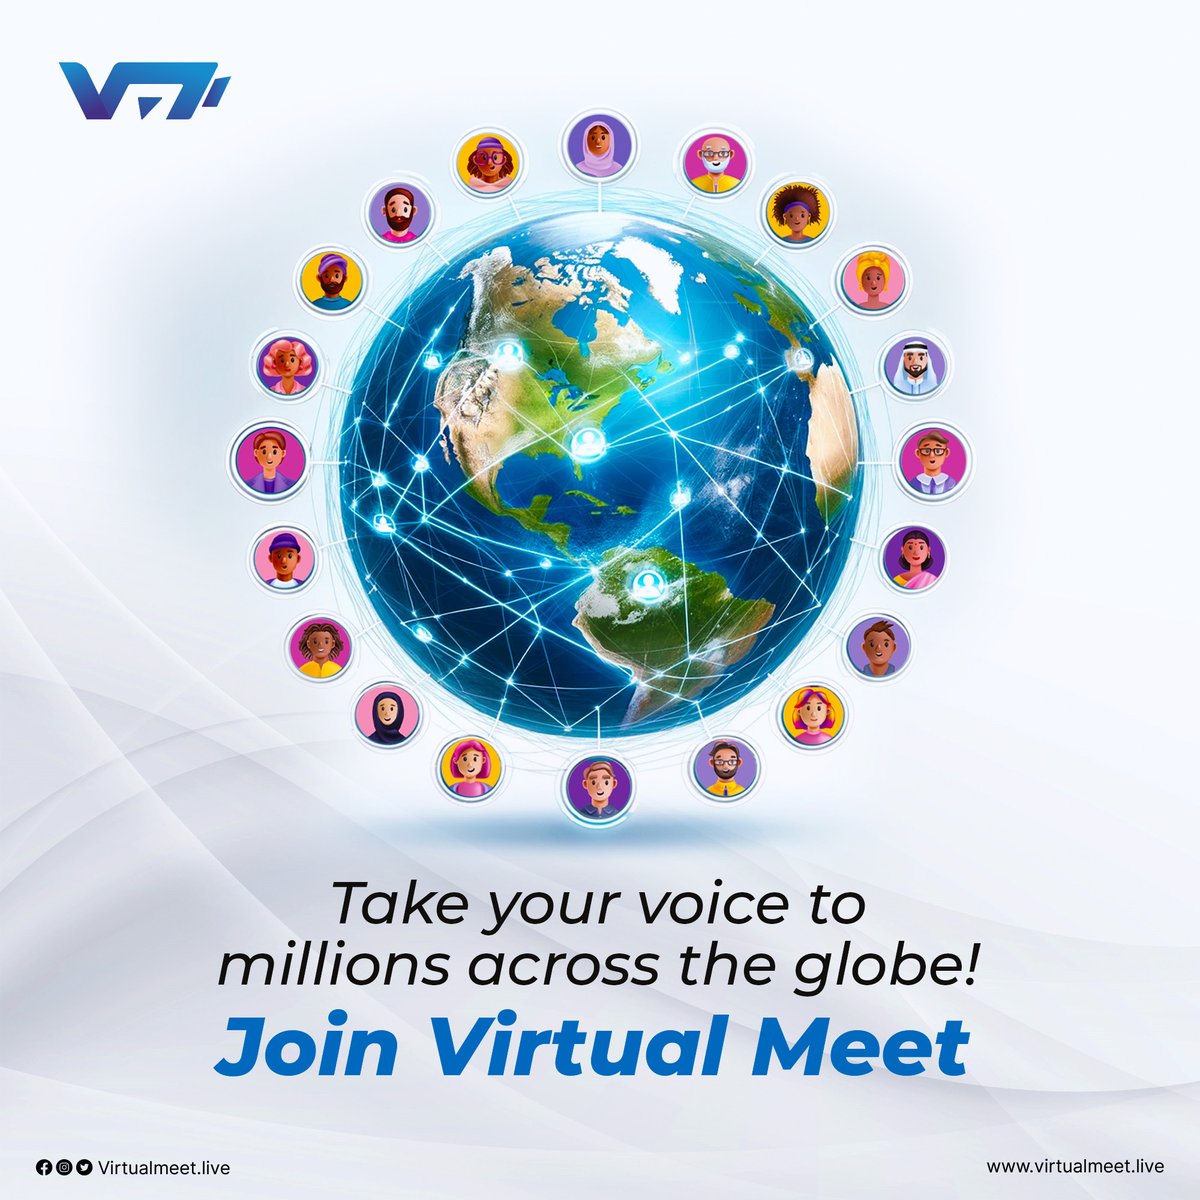 Experience the thrill of reaching millions worldwide with Virtual Meet! 

#VirtualMeet #GlobalReach #CommunicationRevolution #Connectivity #VirtualConnection #GlobalImpact #DigitalCollaboration #OnlineNetworking #VirtualPlatform #GlobalAudience #CollaborativeSpace #Empowerment